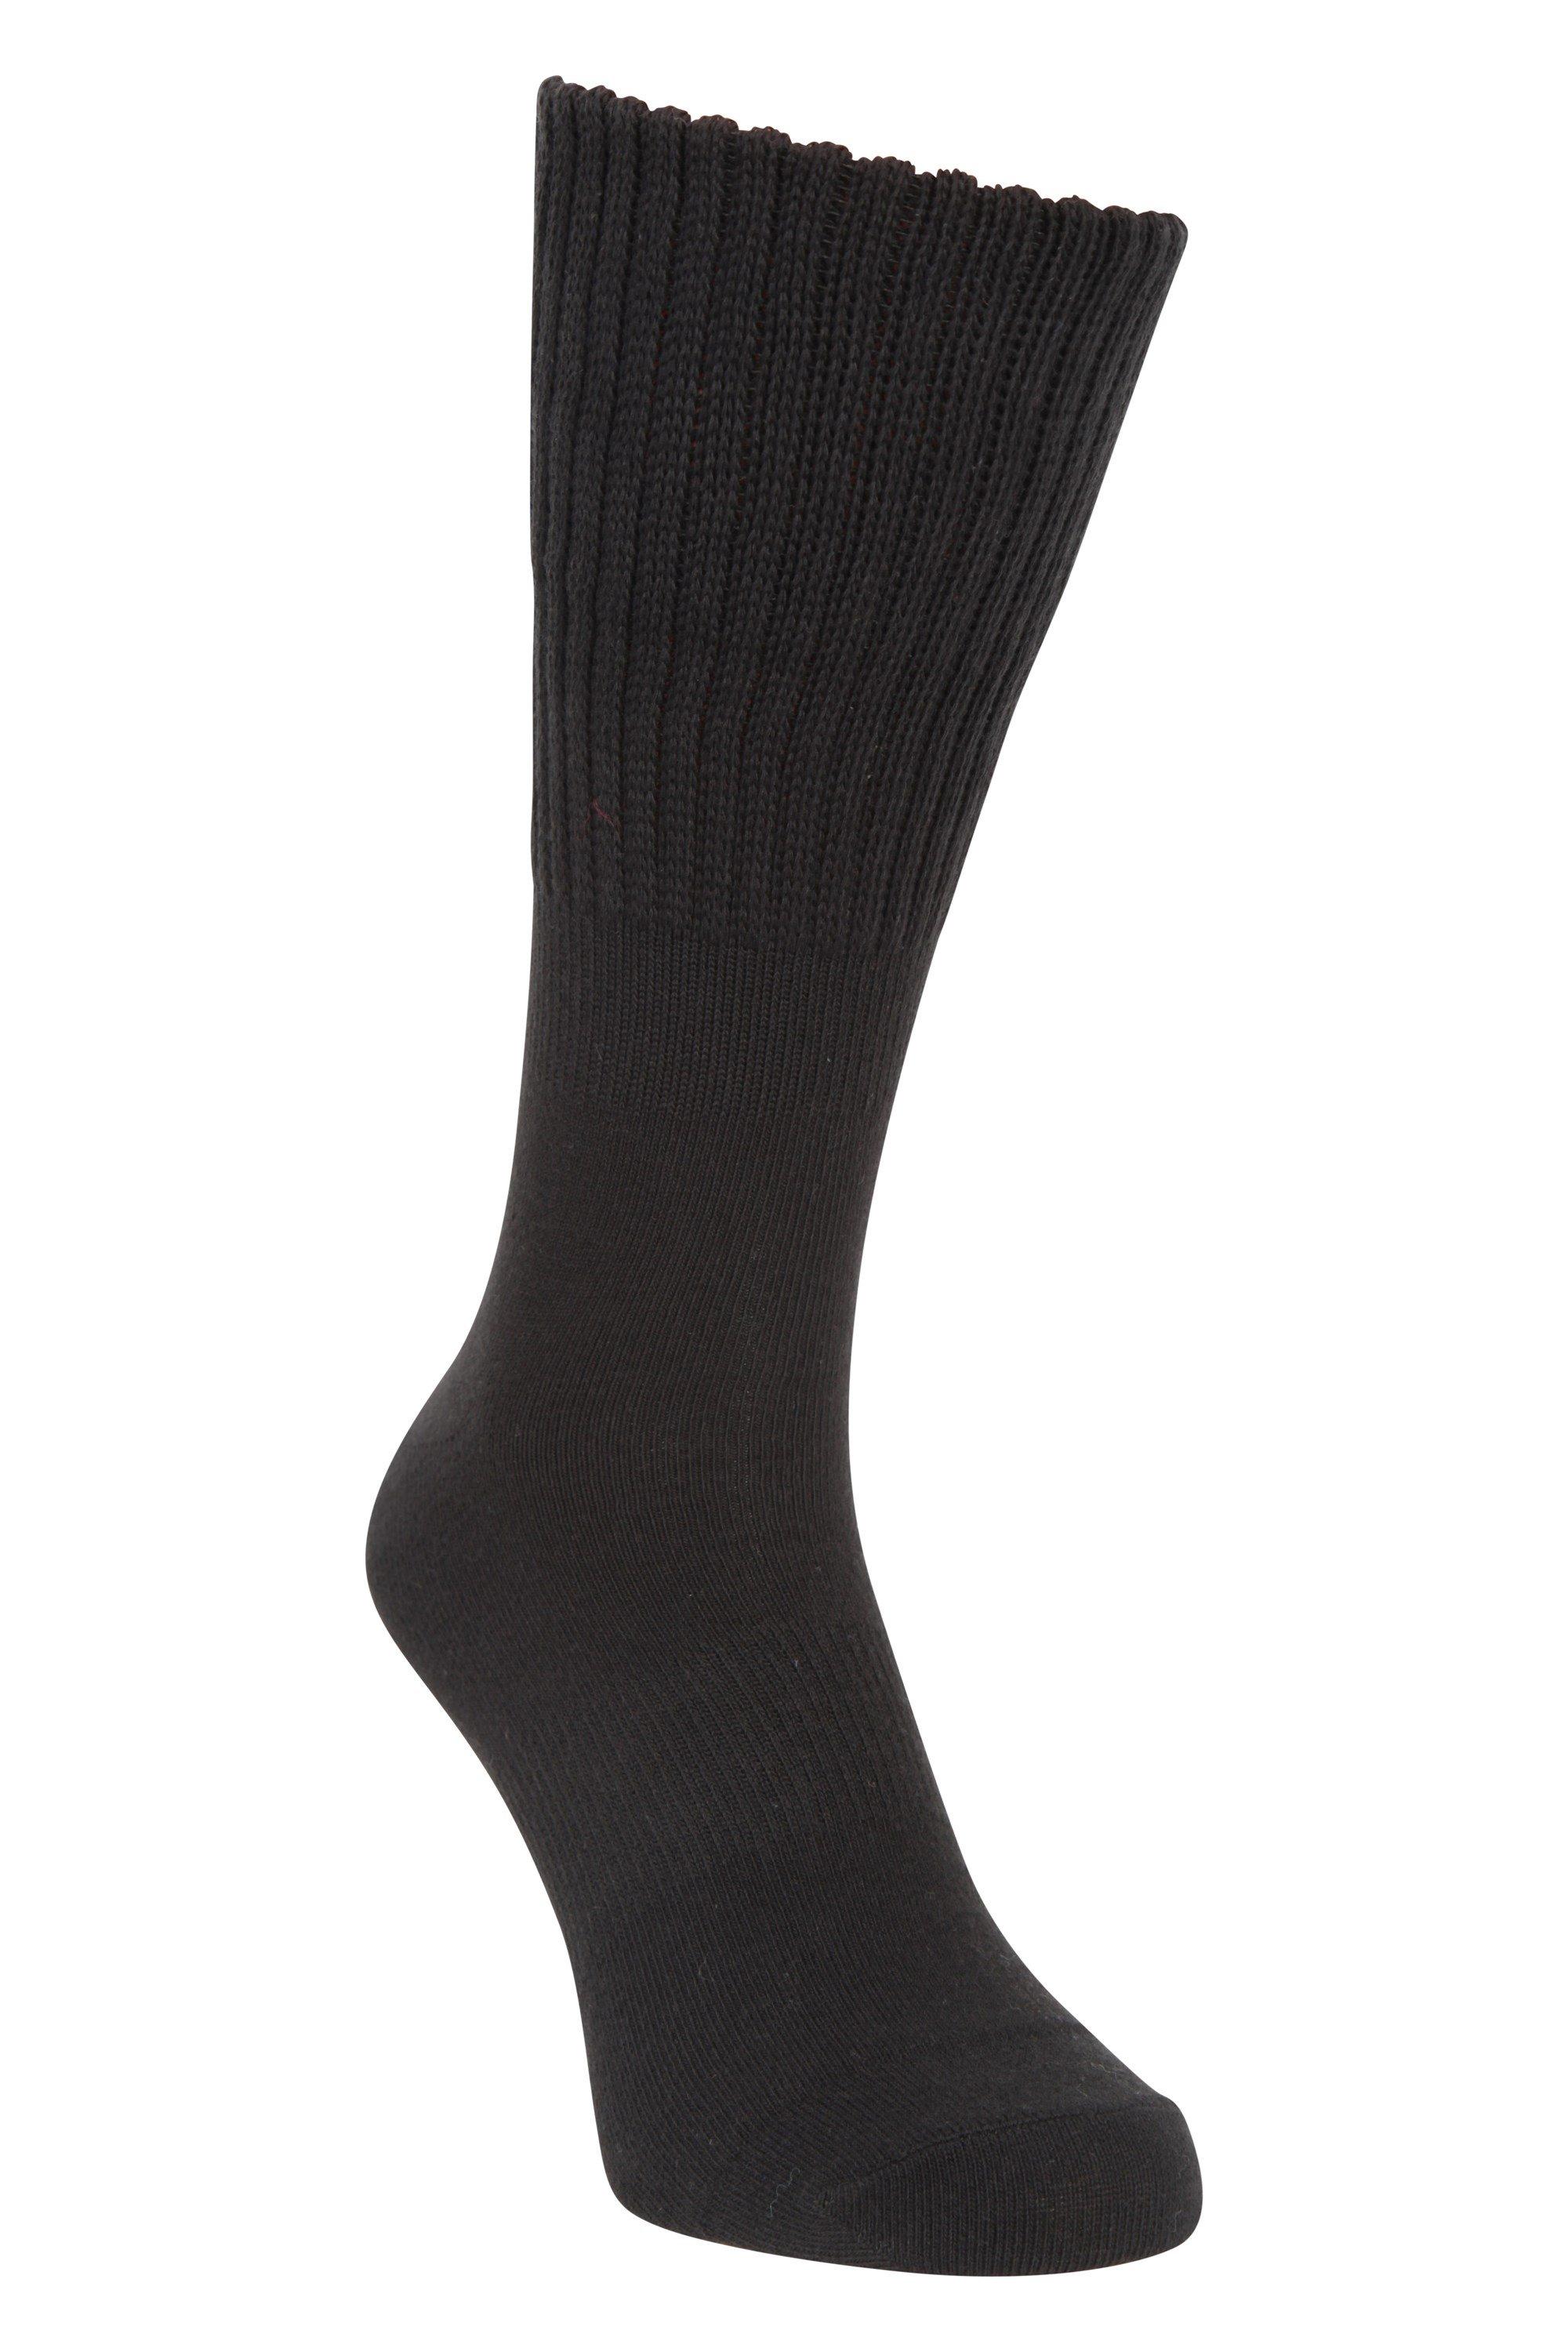 Anti Chafe Walking Socks Quick Wick Lightweight Socks